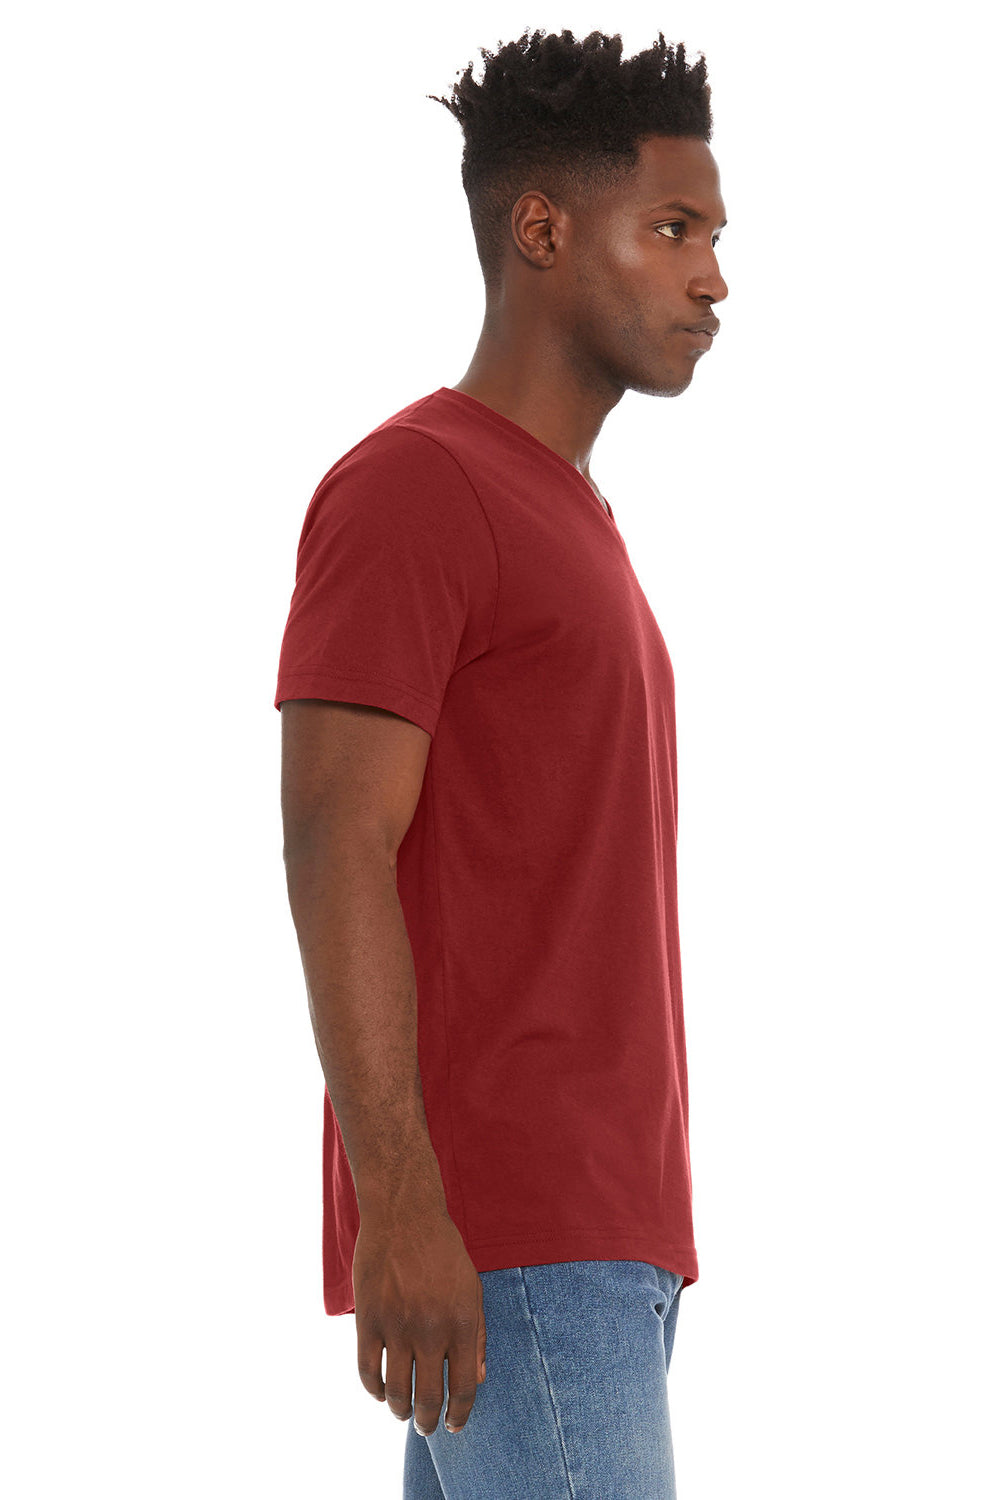 Bella + Canvas BC3005/3005/3655C Mens Jersey Short Sleeve V-Neck T-Shirt Cardinal Red Model Side